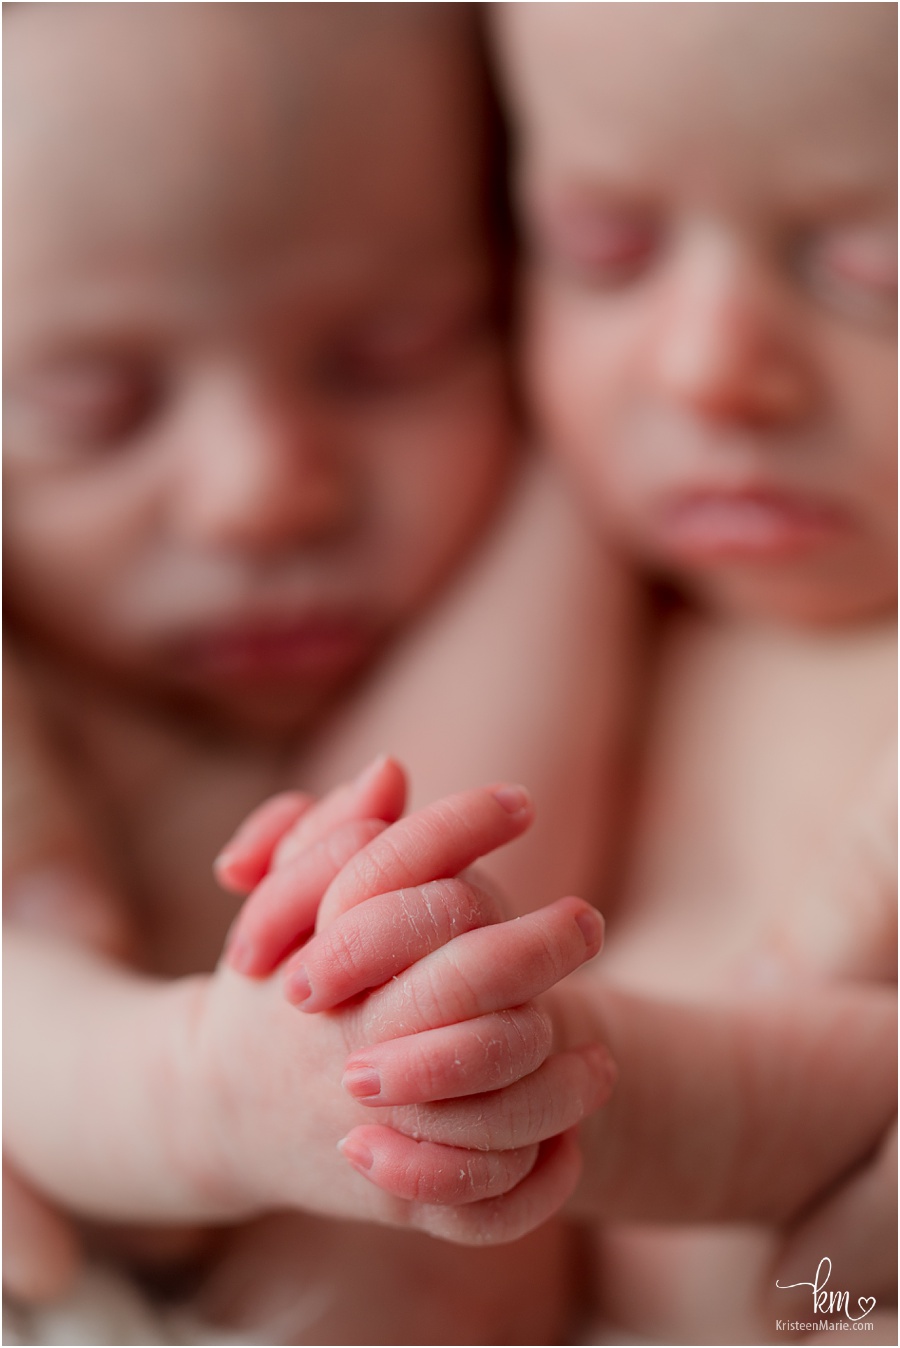 newborn twins holding hands 